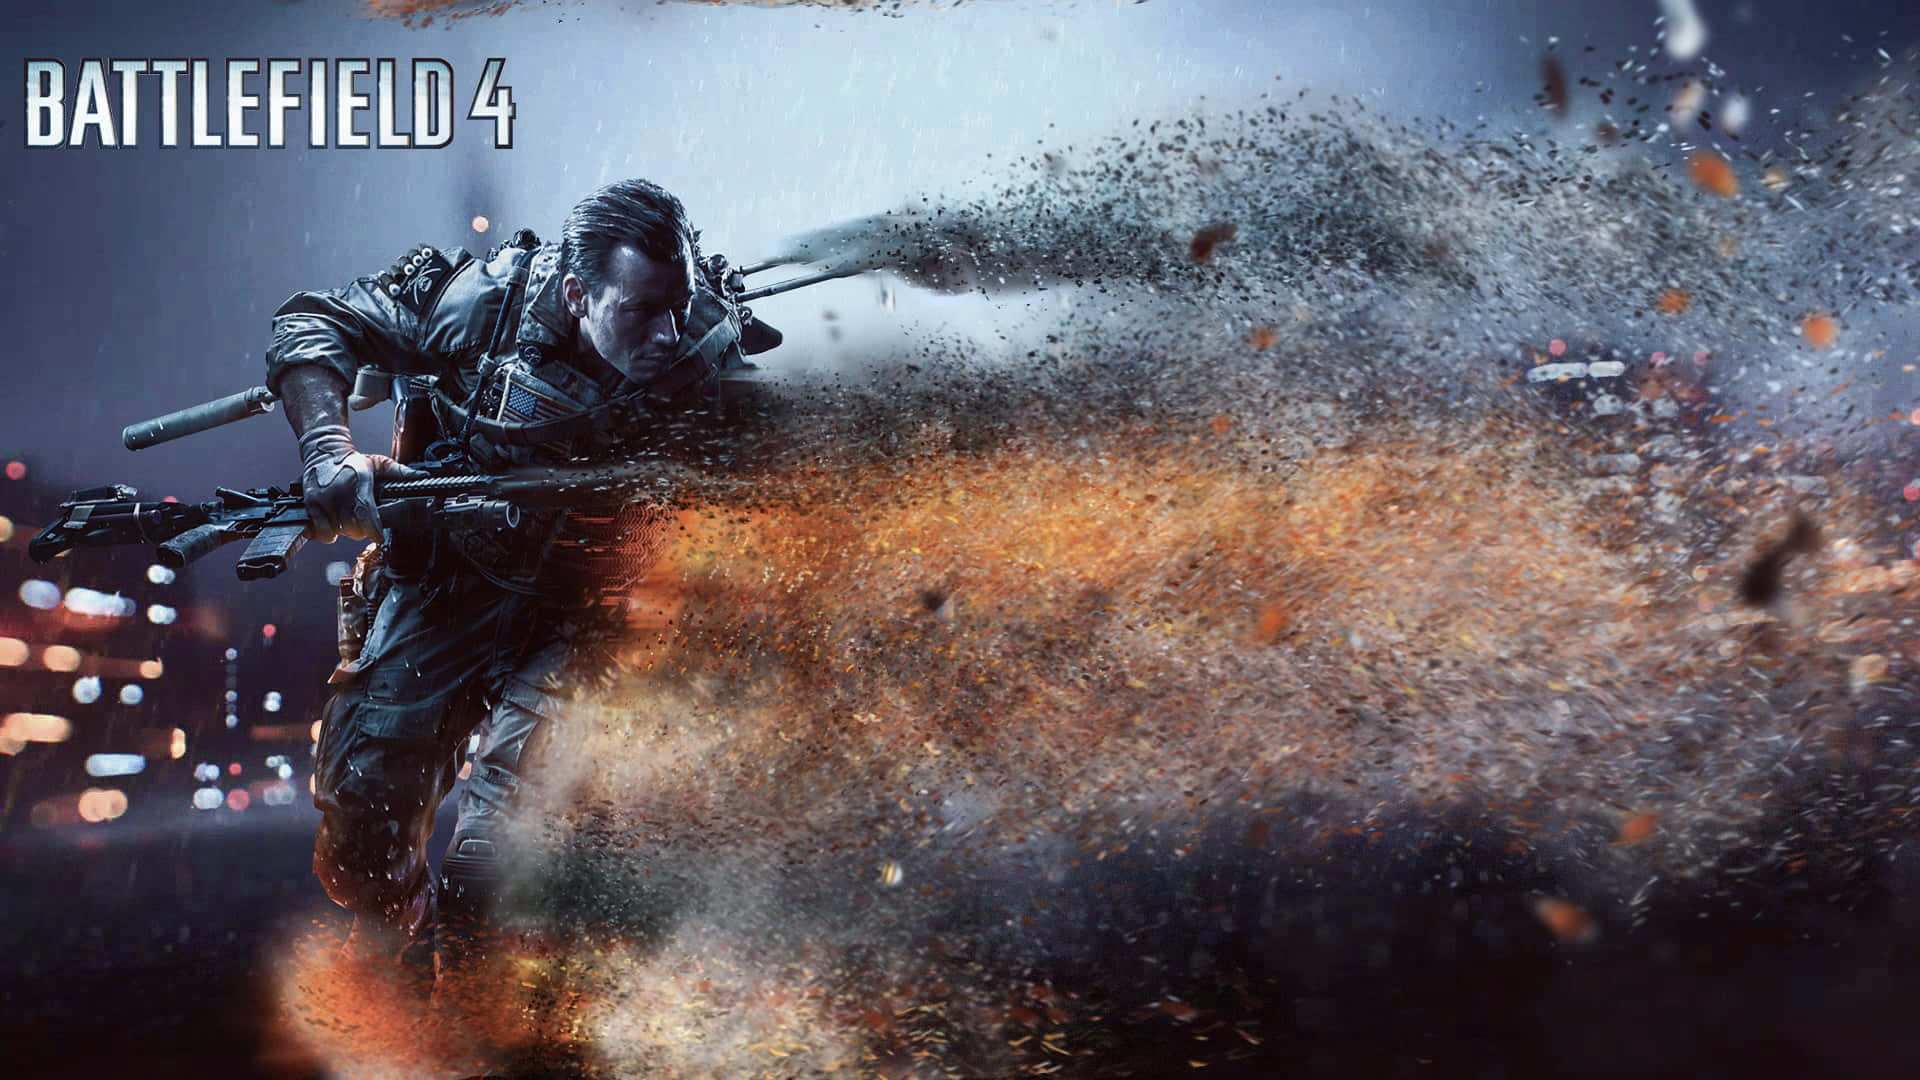 Play Battlefield 4 in Overwhelming HD